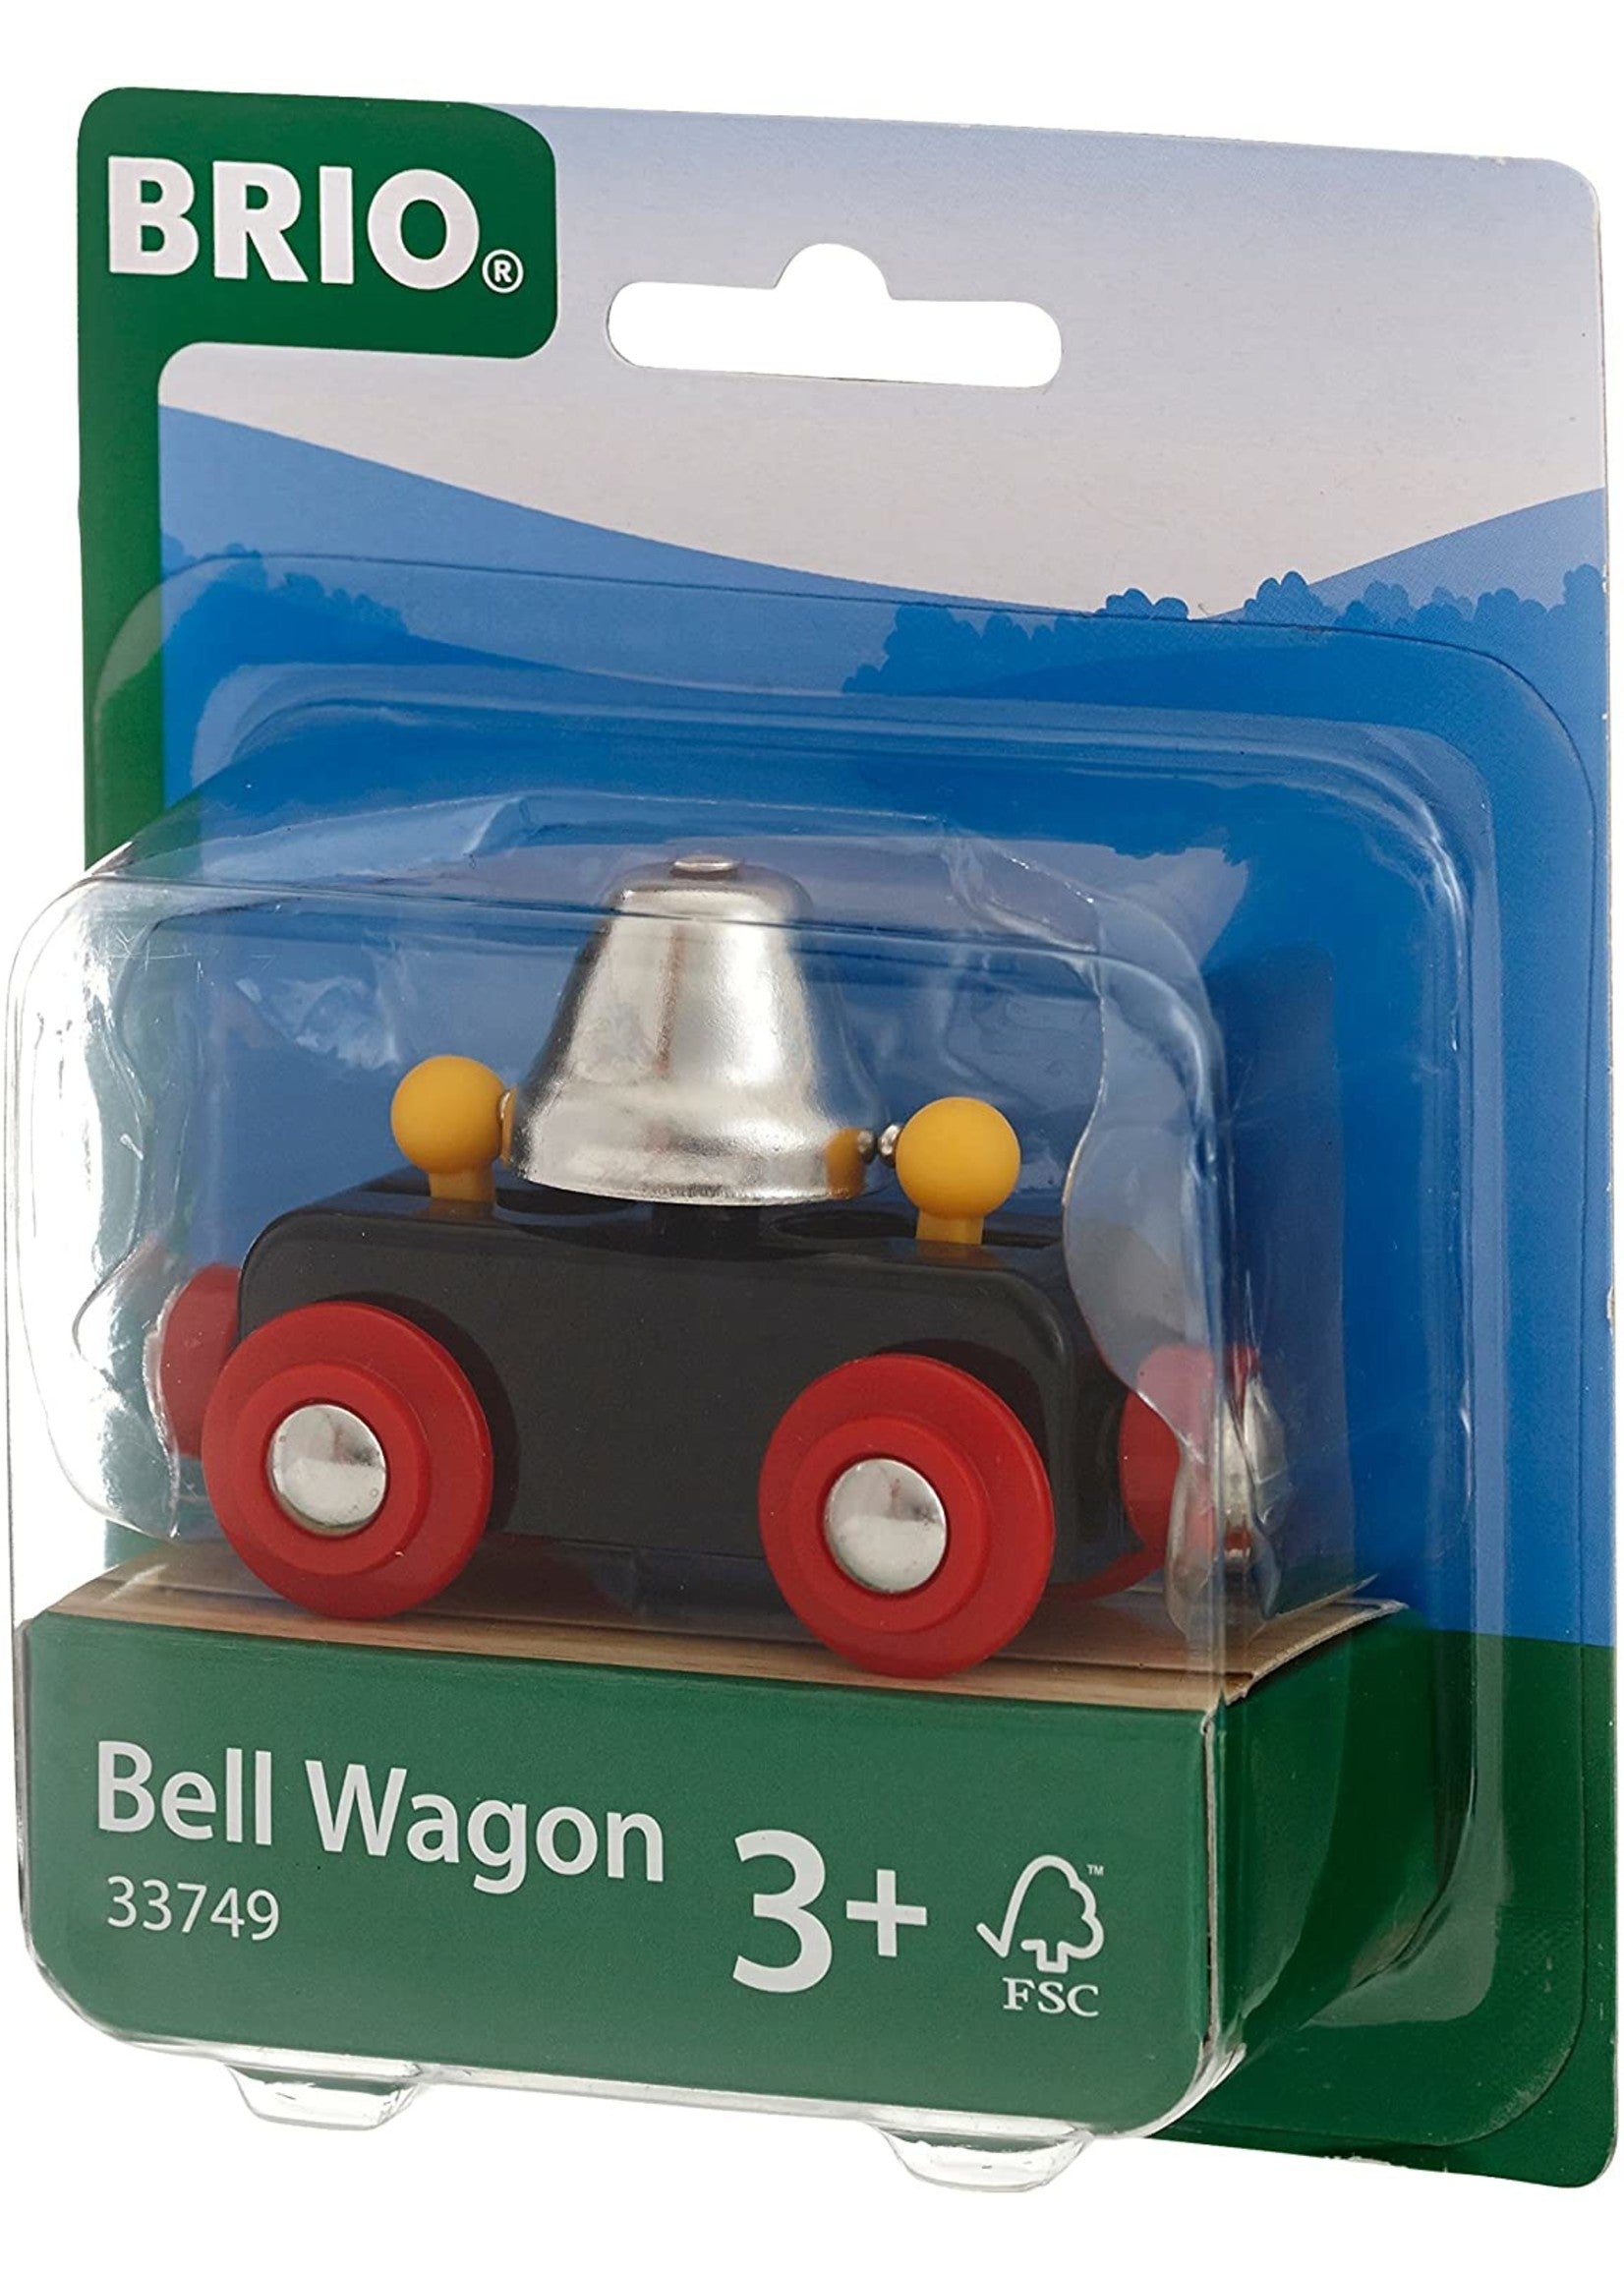 Bell Wagon